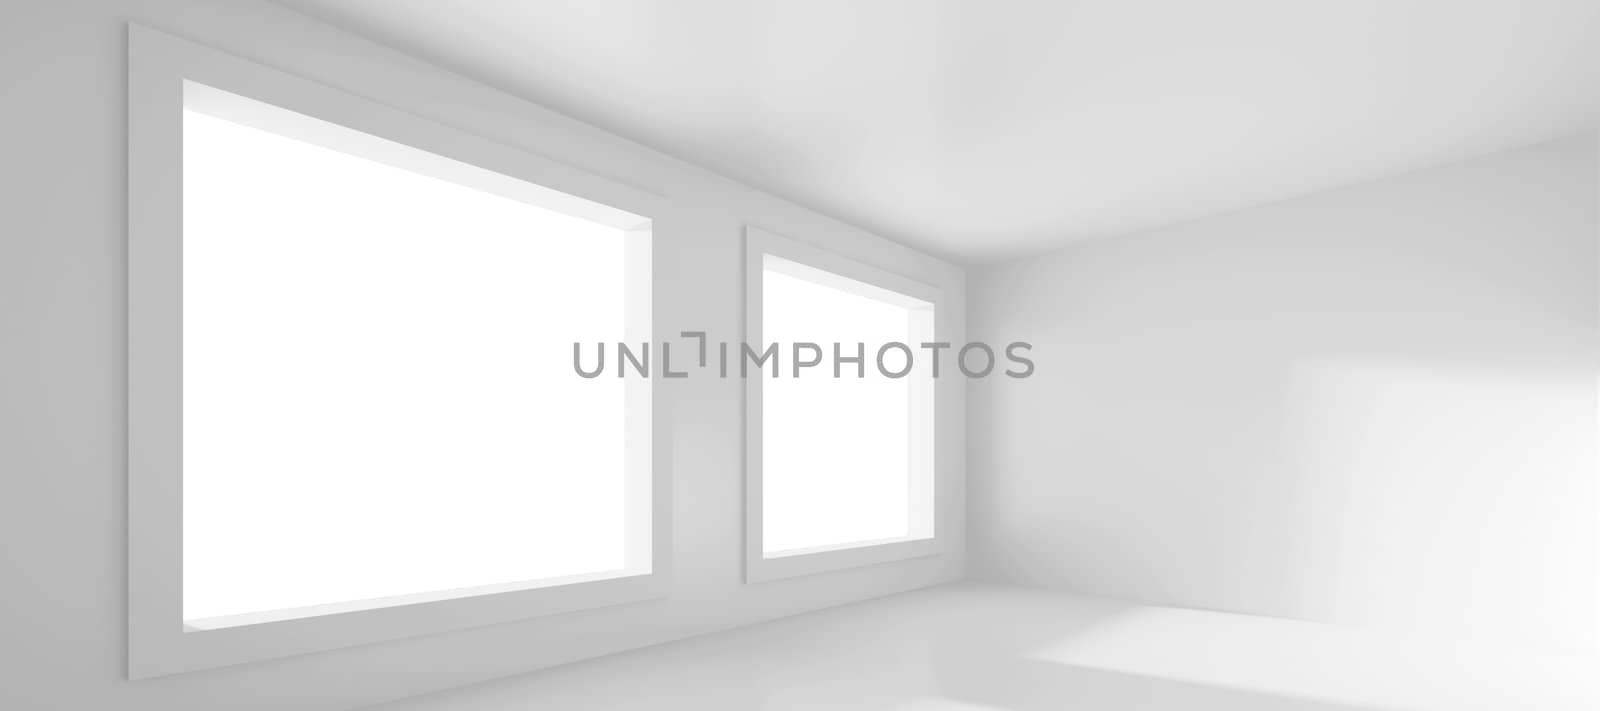 3d Rendering of White Empty Room